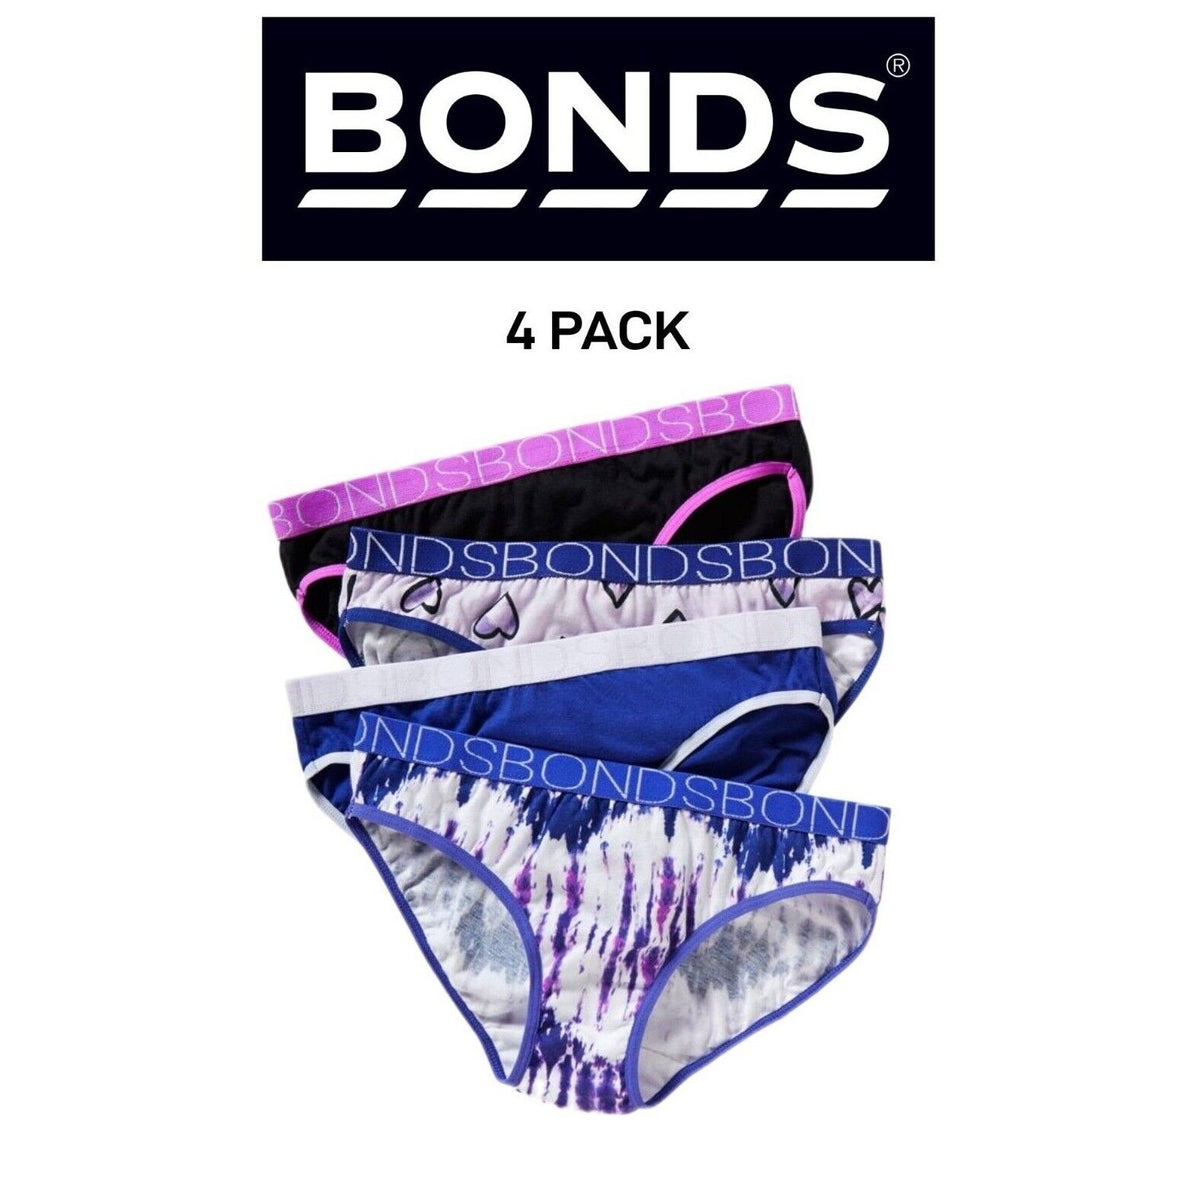 Bonds Girls Bikini Soft Breathable Cotton Comfortable Coverage 4 Pack UXYH4A